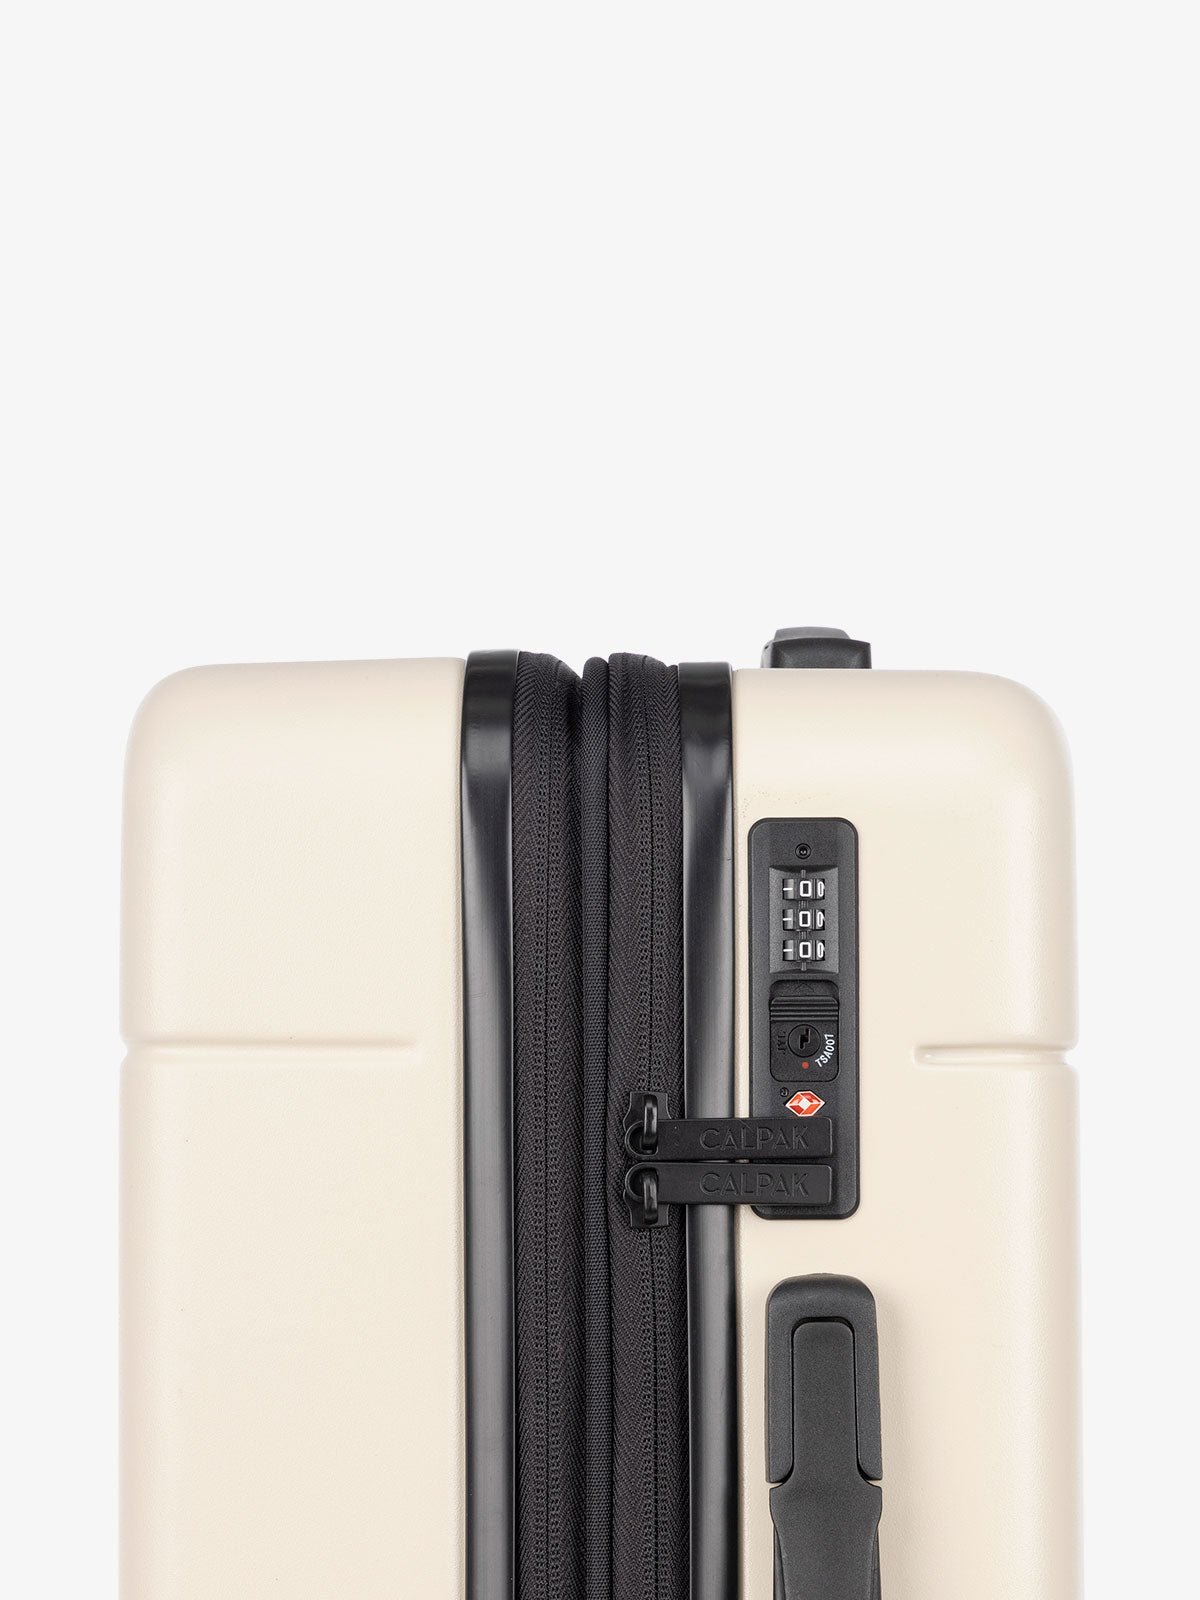 cream linen CALPAK Hue checked luggage with built-in TSA lock